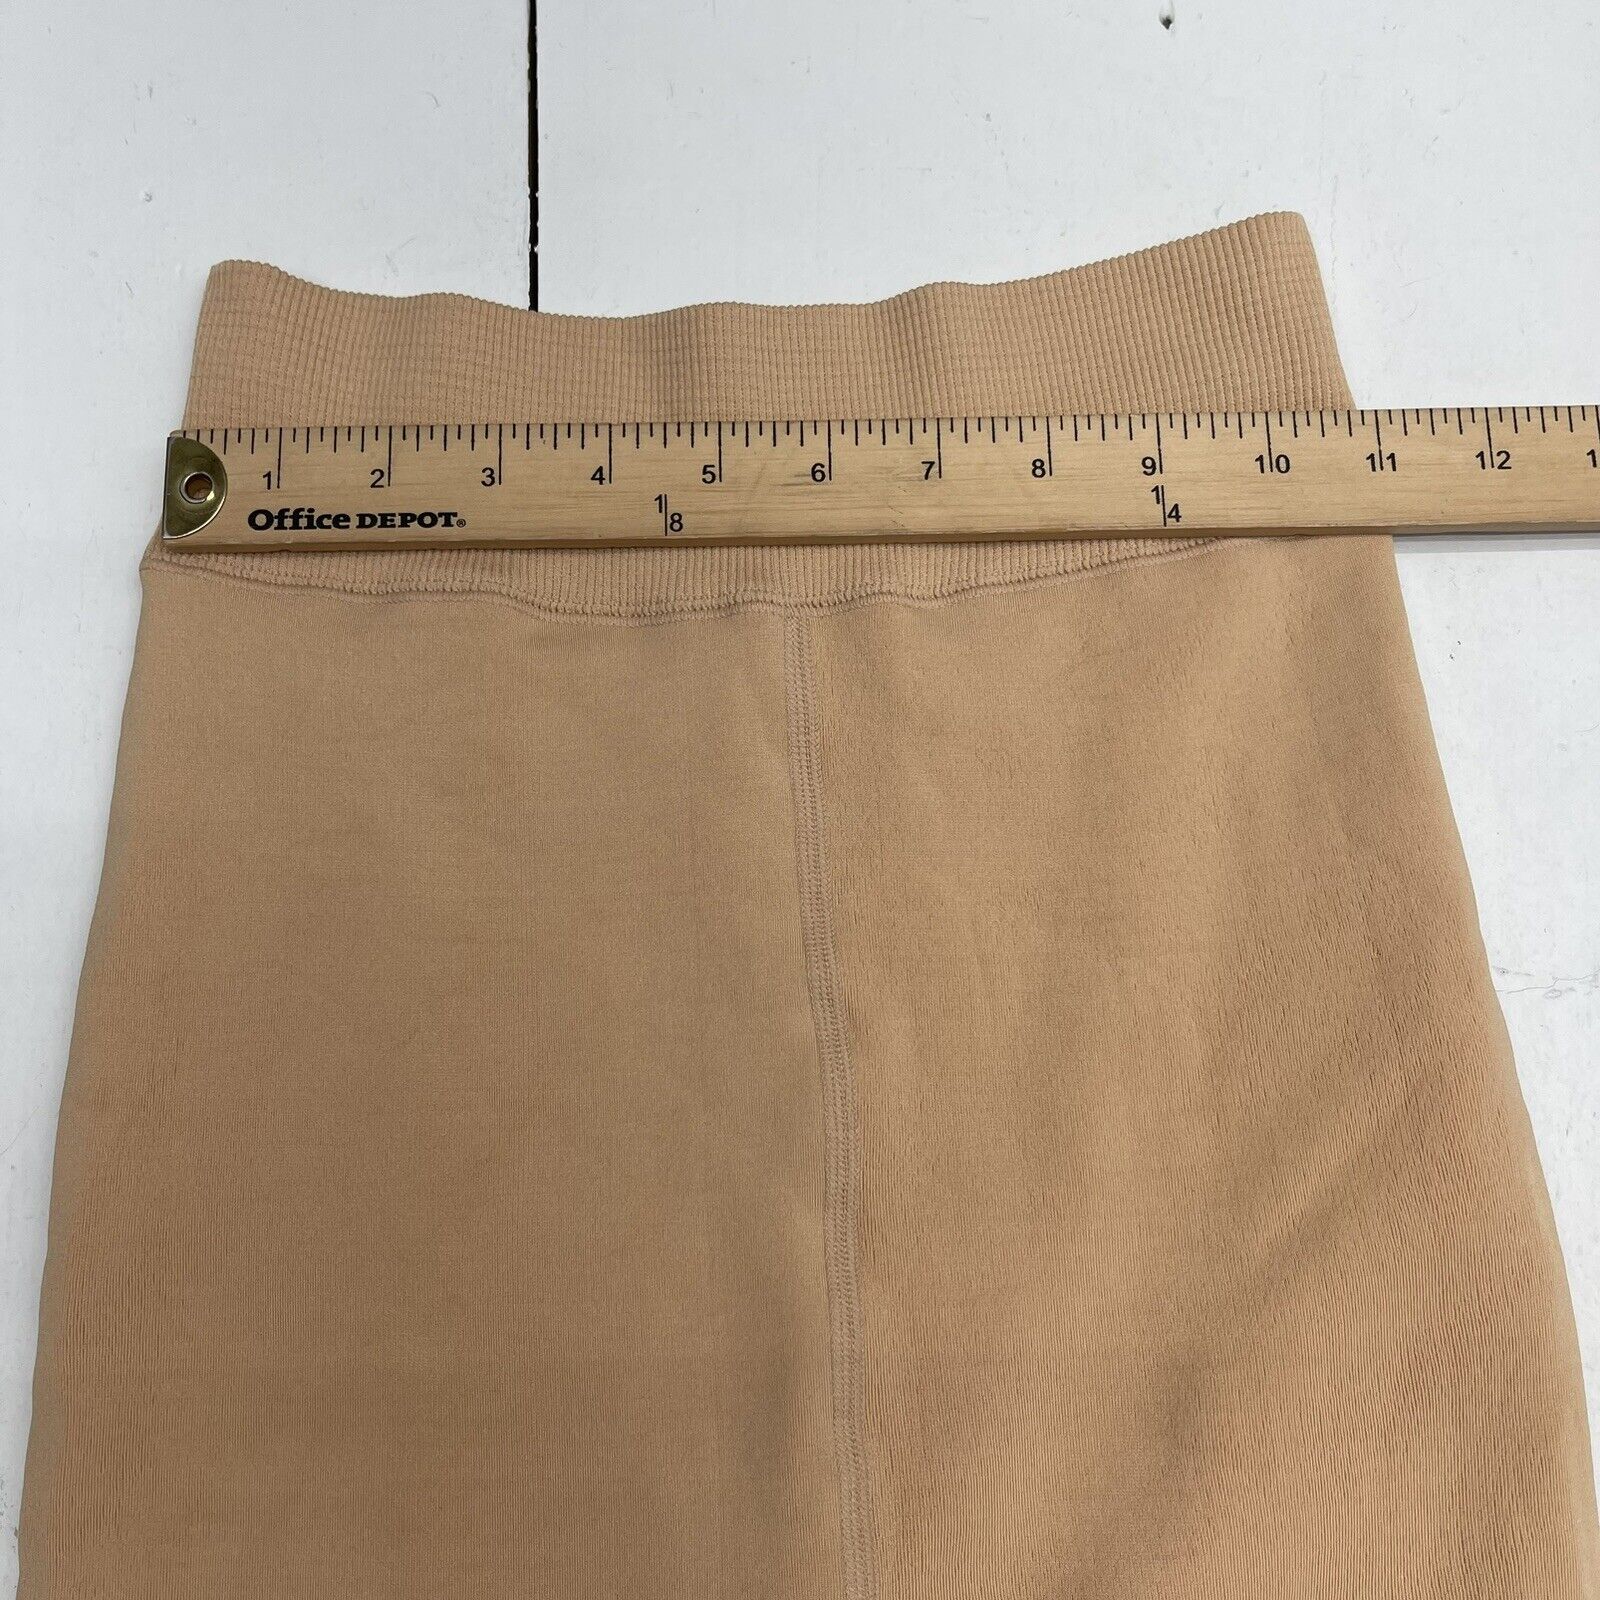 Chrleisure tan Fleece Lined Leggings Women's Size M/L New - beyond